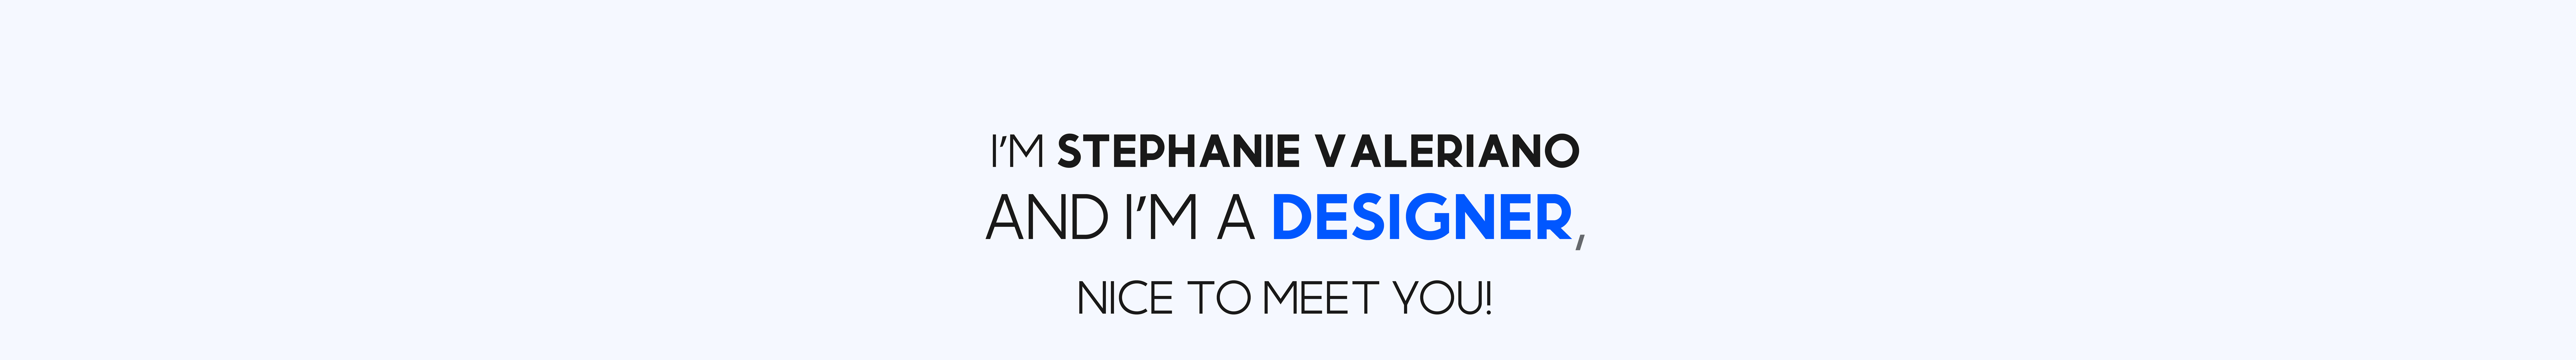 Profielbanner van Stephanie Valeriano